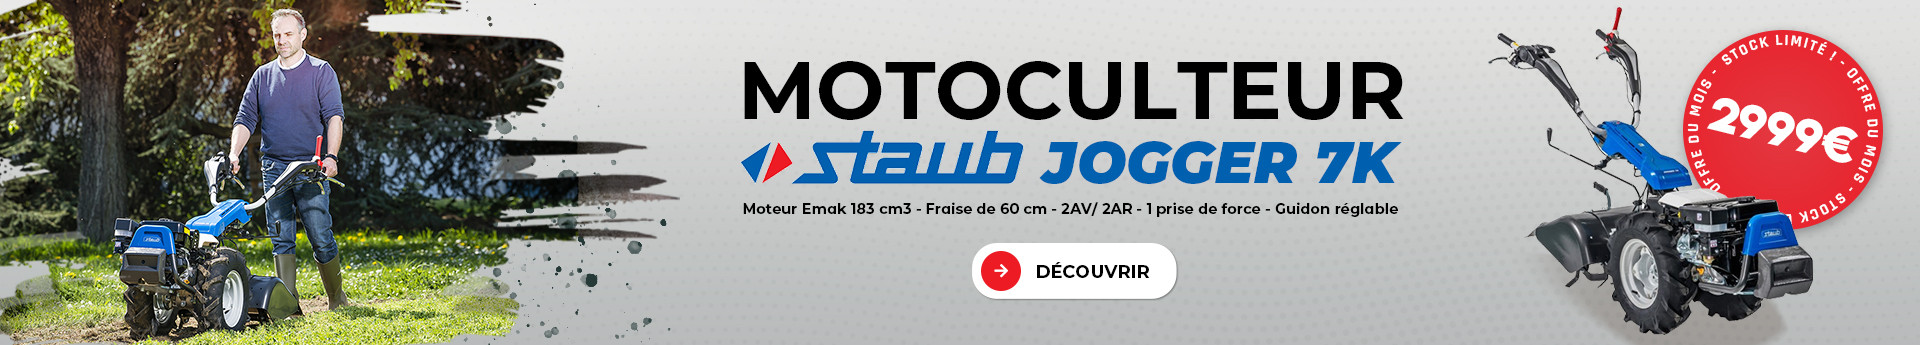 Motoculteur Staub Jogger 7K